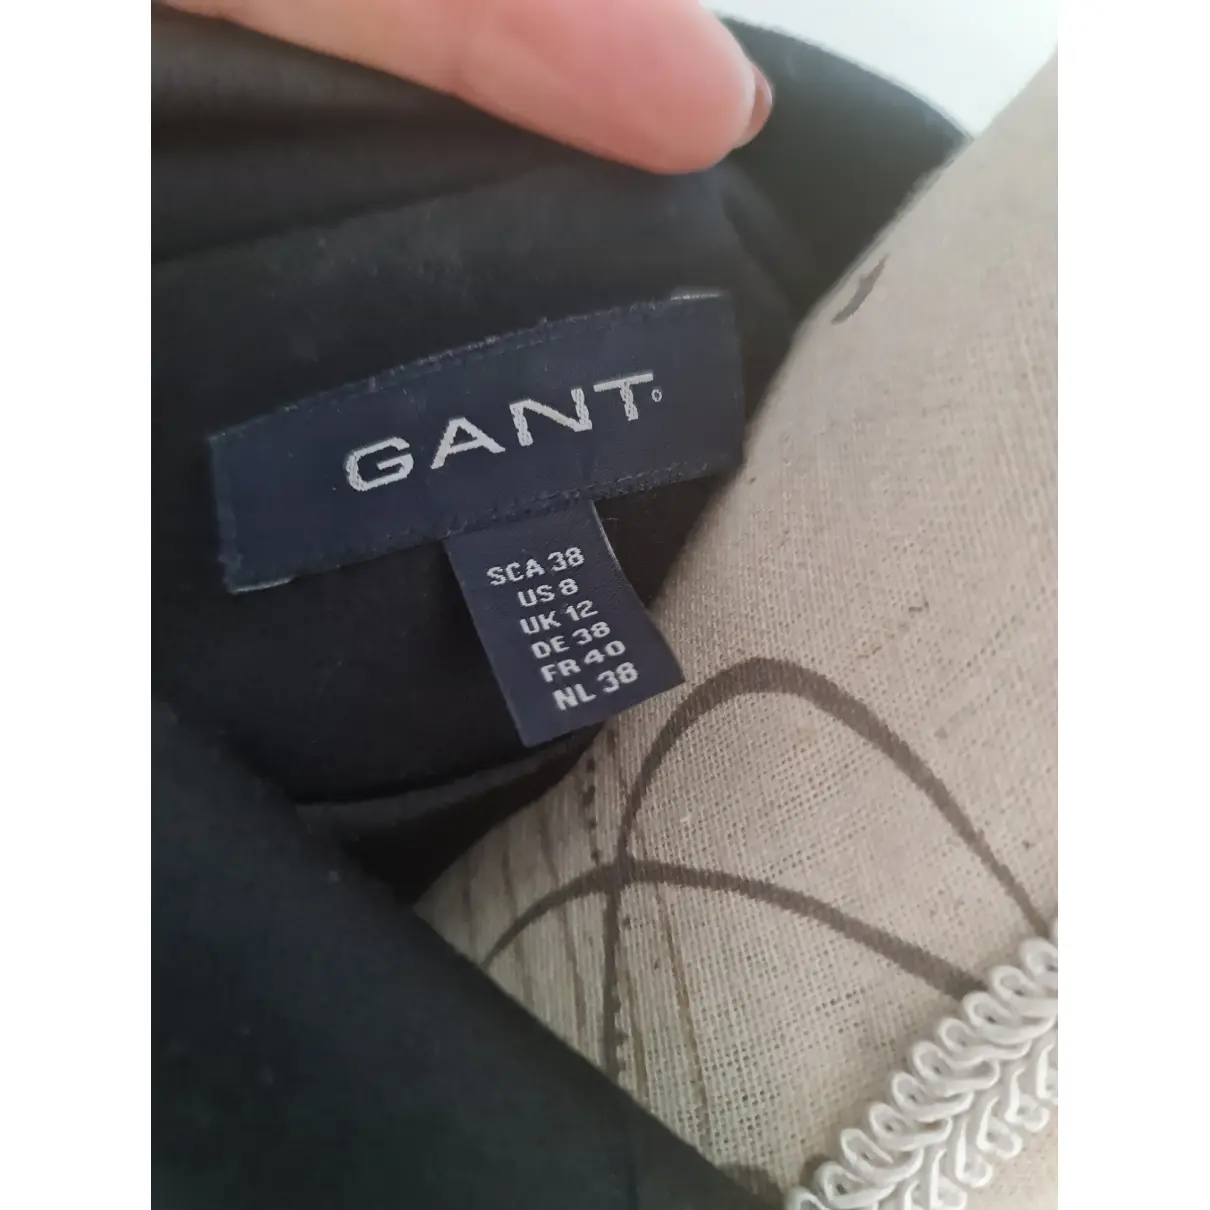 Buy Gant Wool blazer online